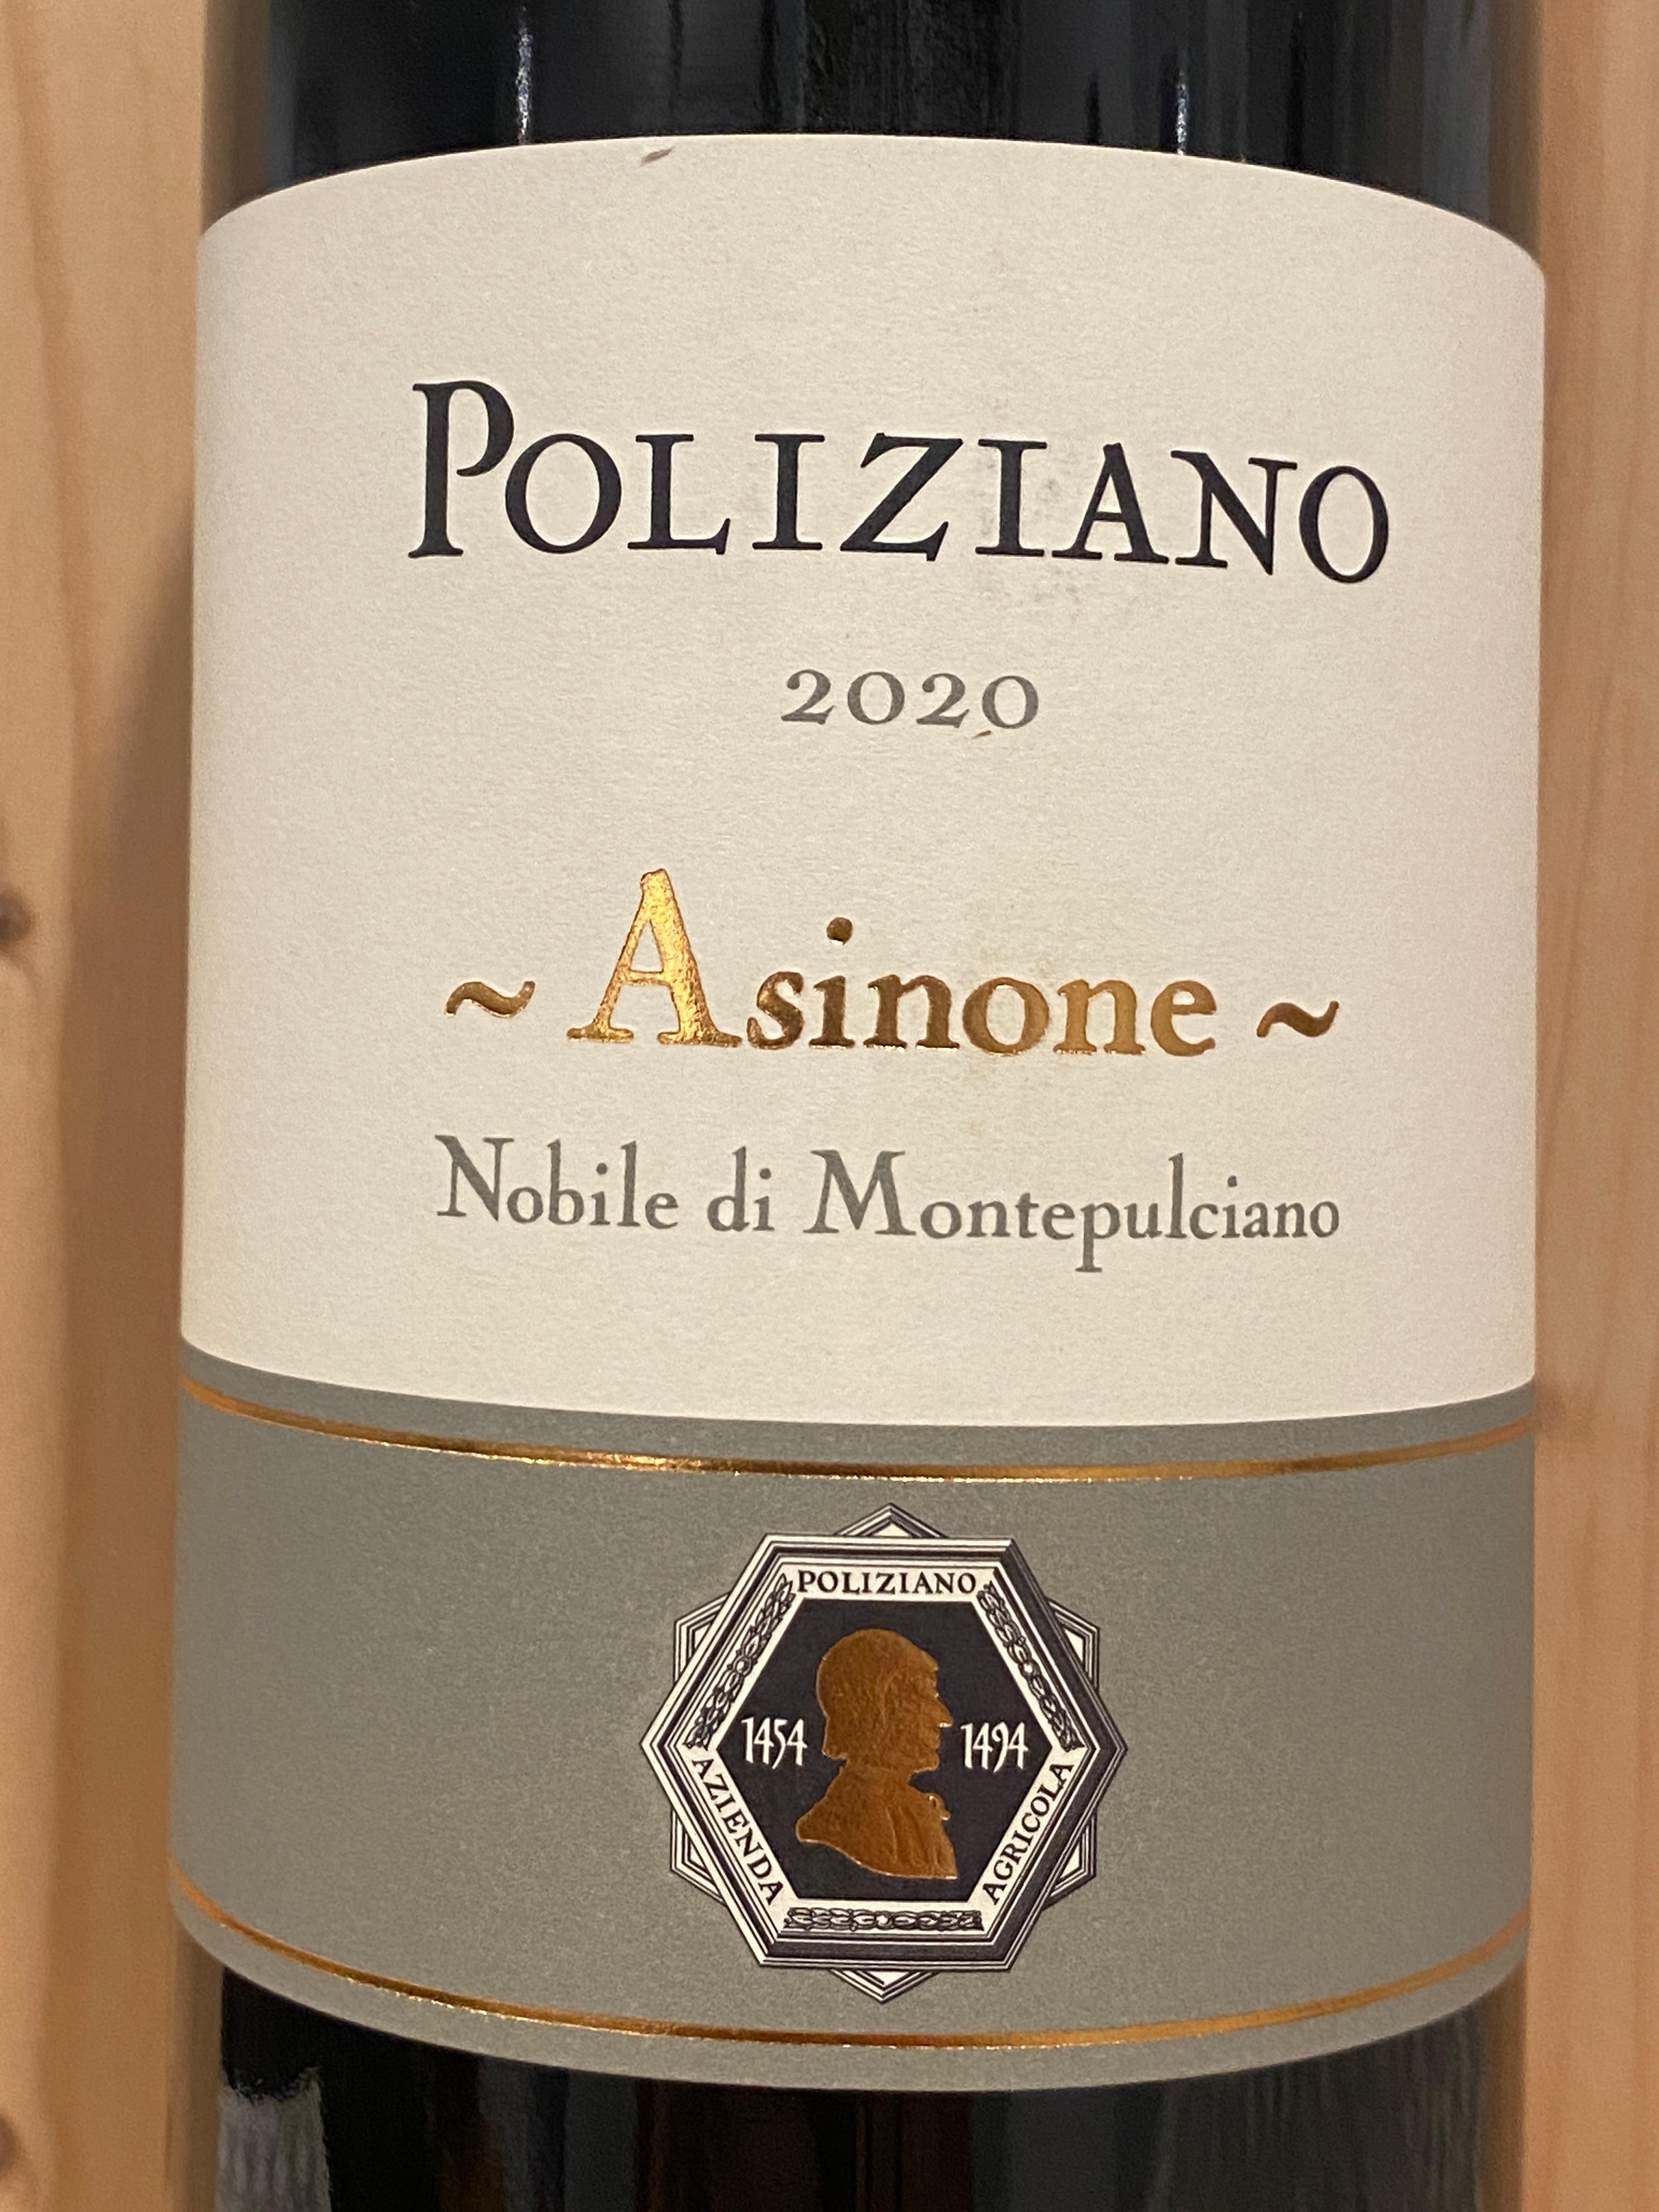 Poliziano "Asinone" Vino Nobile di Montepulciano 2020: Tuscany, Italy